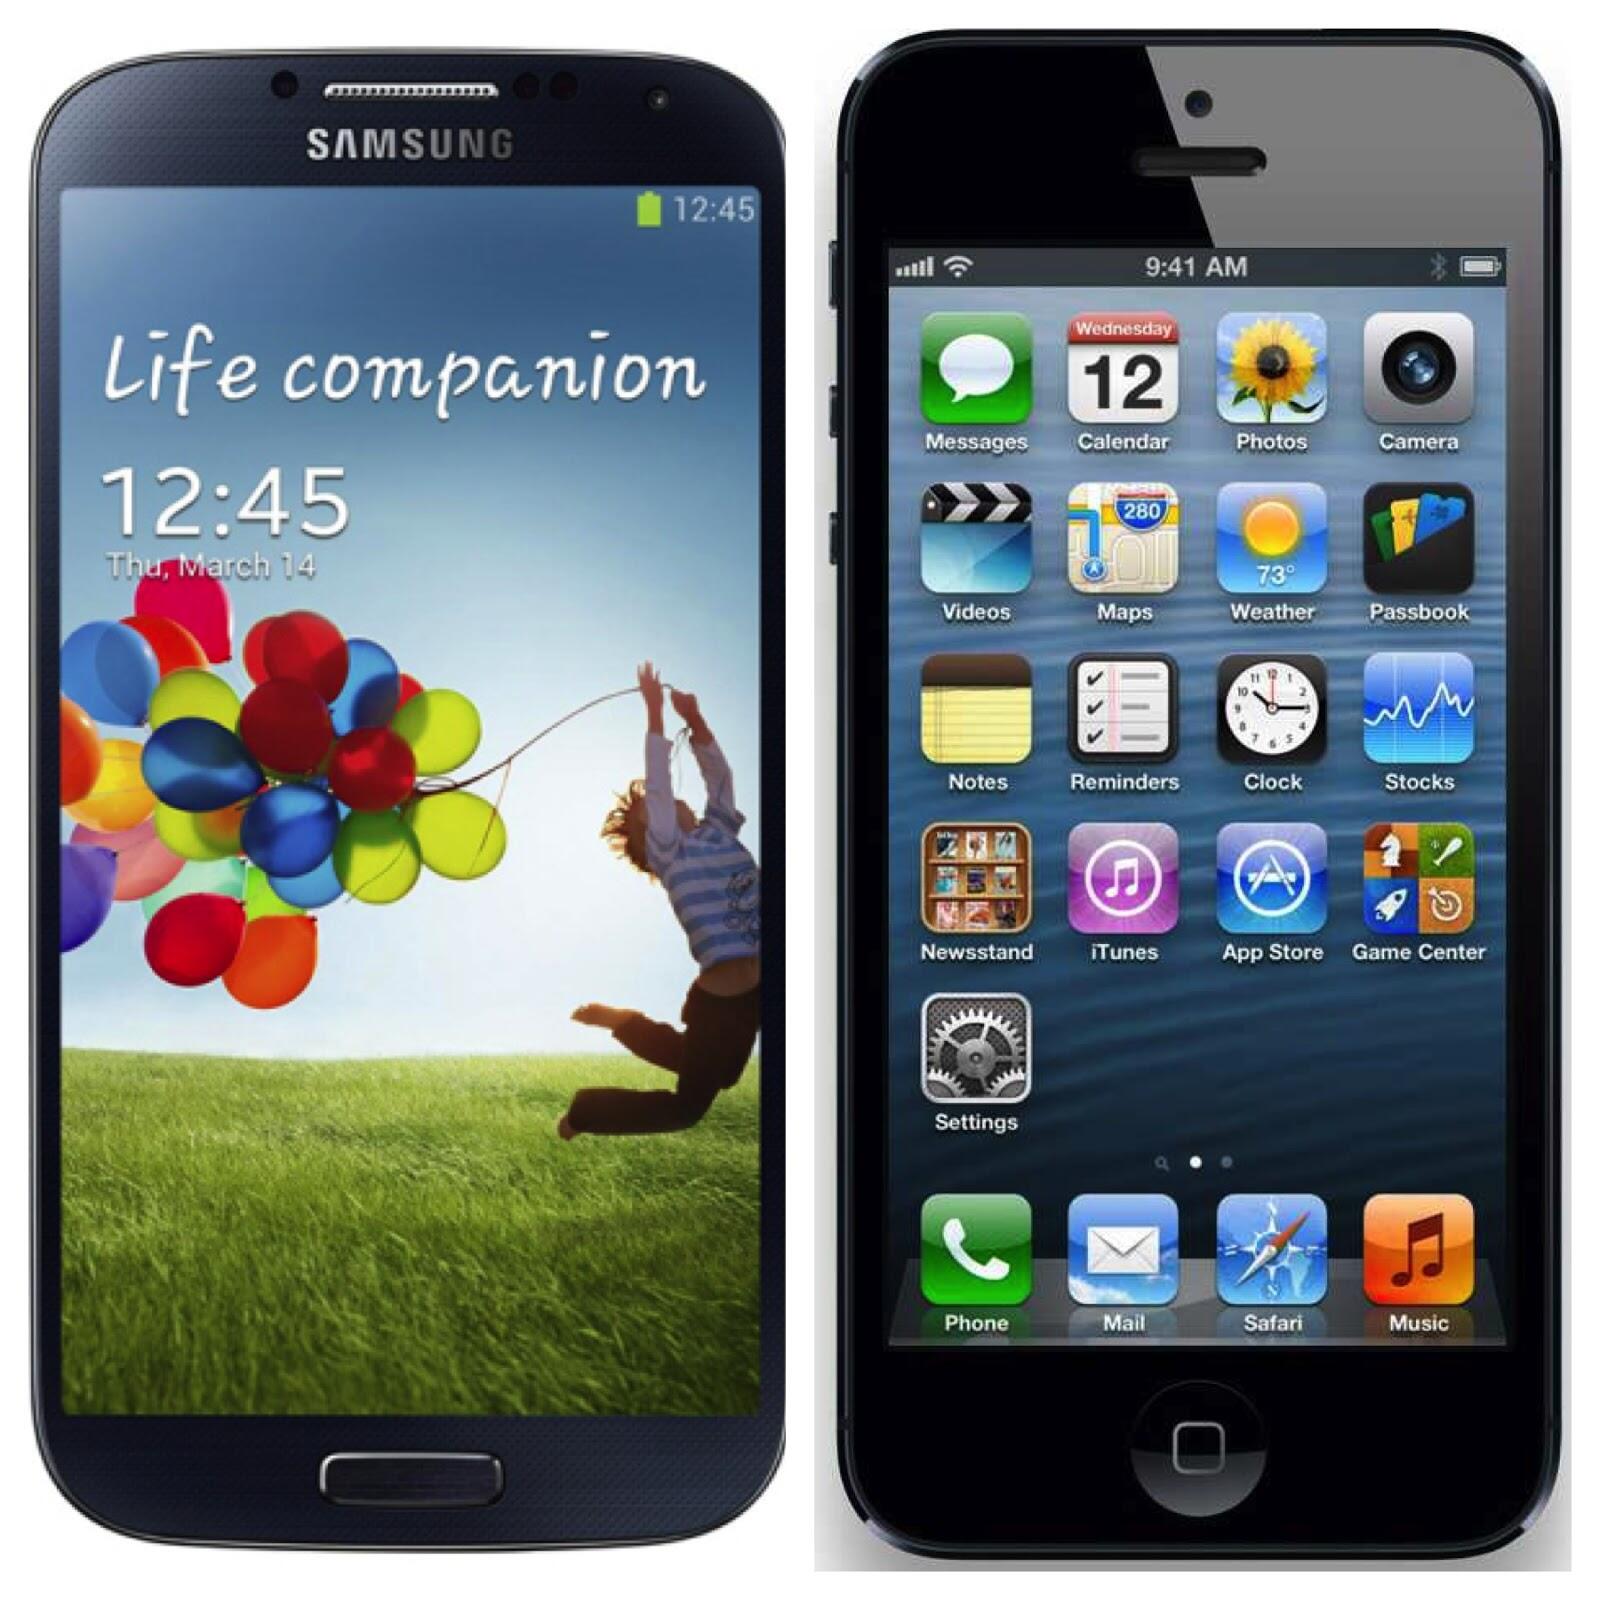 Samsung iphone apple. Samsung Galaxy iphone. Samsung Galaxy s iphone. Айфон 5 самсунг. Самсунг айфон 4.